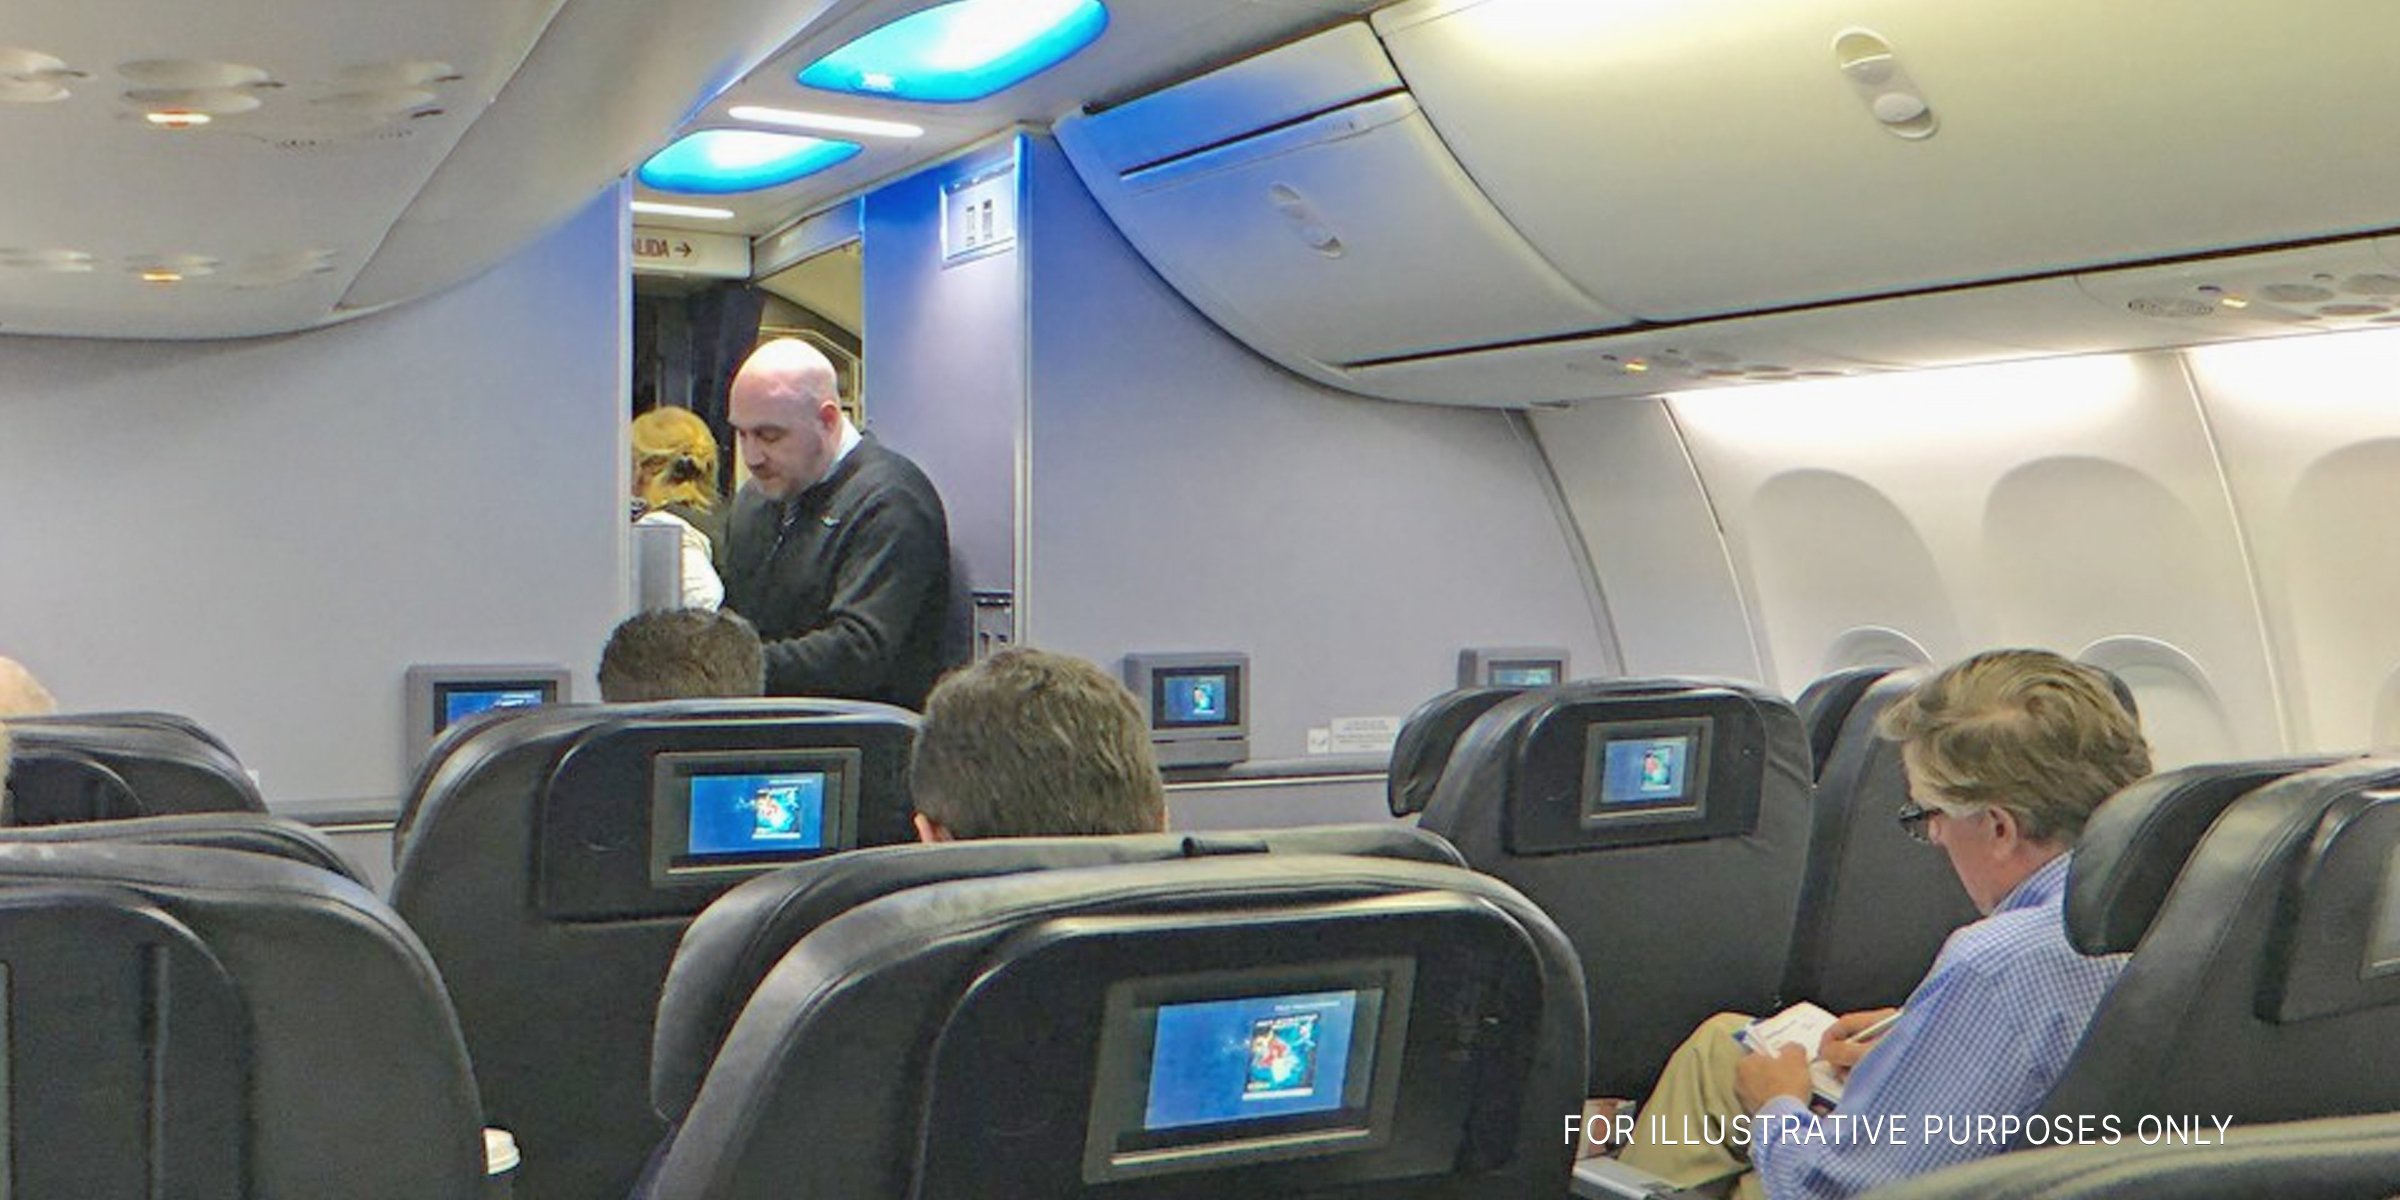 Flight attendant on plane | Source: Flickr.com/alan-light (CC BY 2.0)